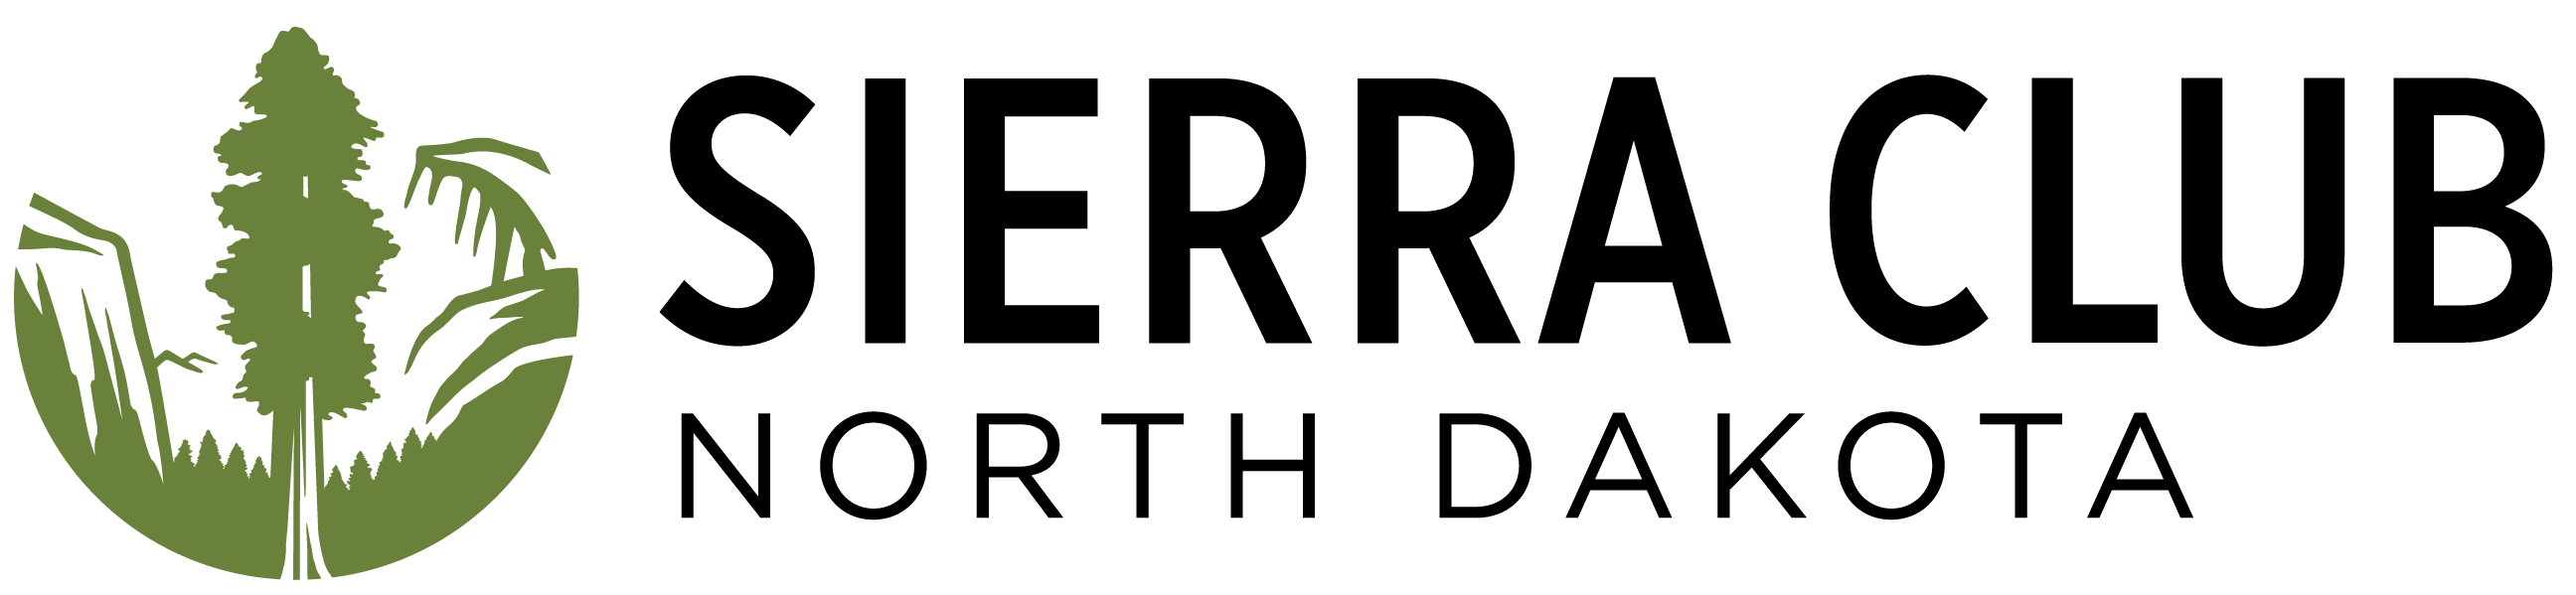 North Dakota Chapter chapter logo